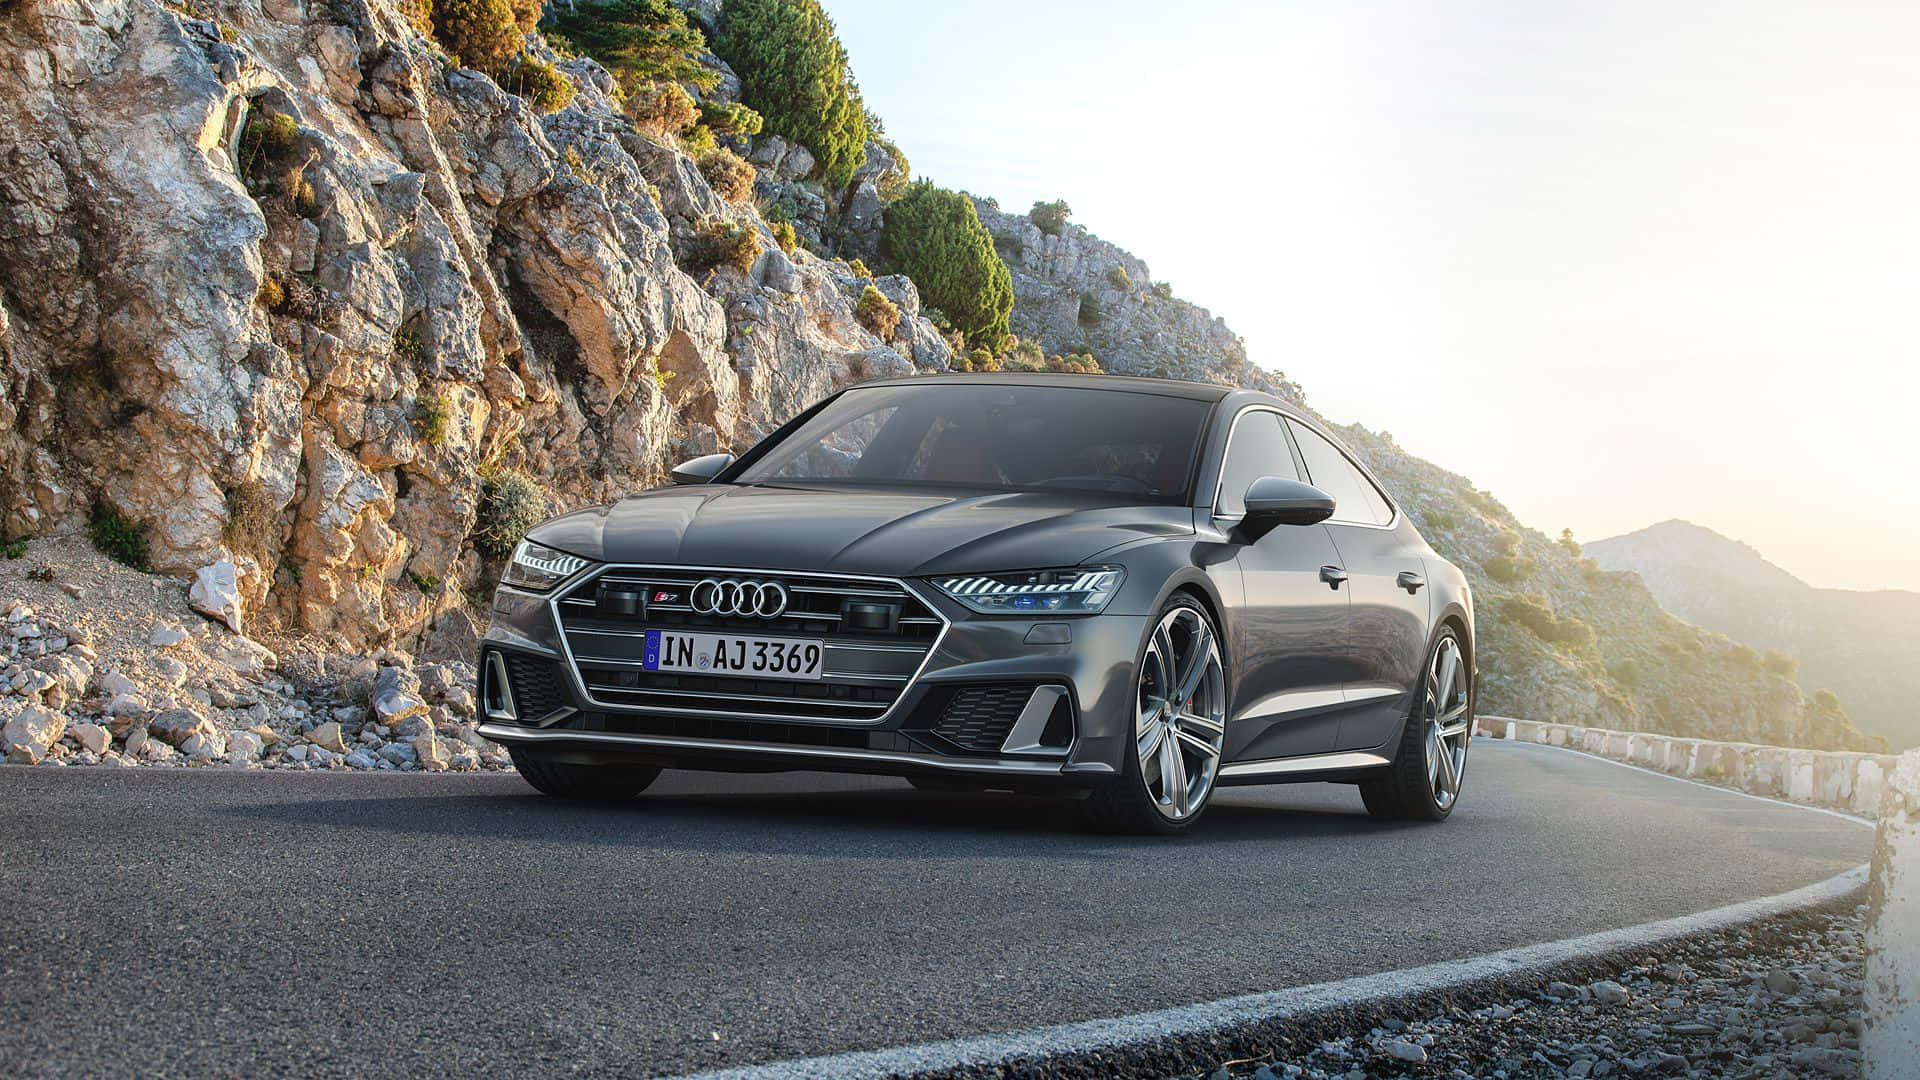 The luxurious Audi S7 speeding through a picturesque landscape Wallpaper